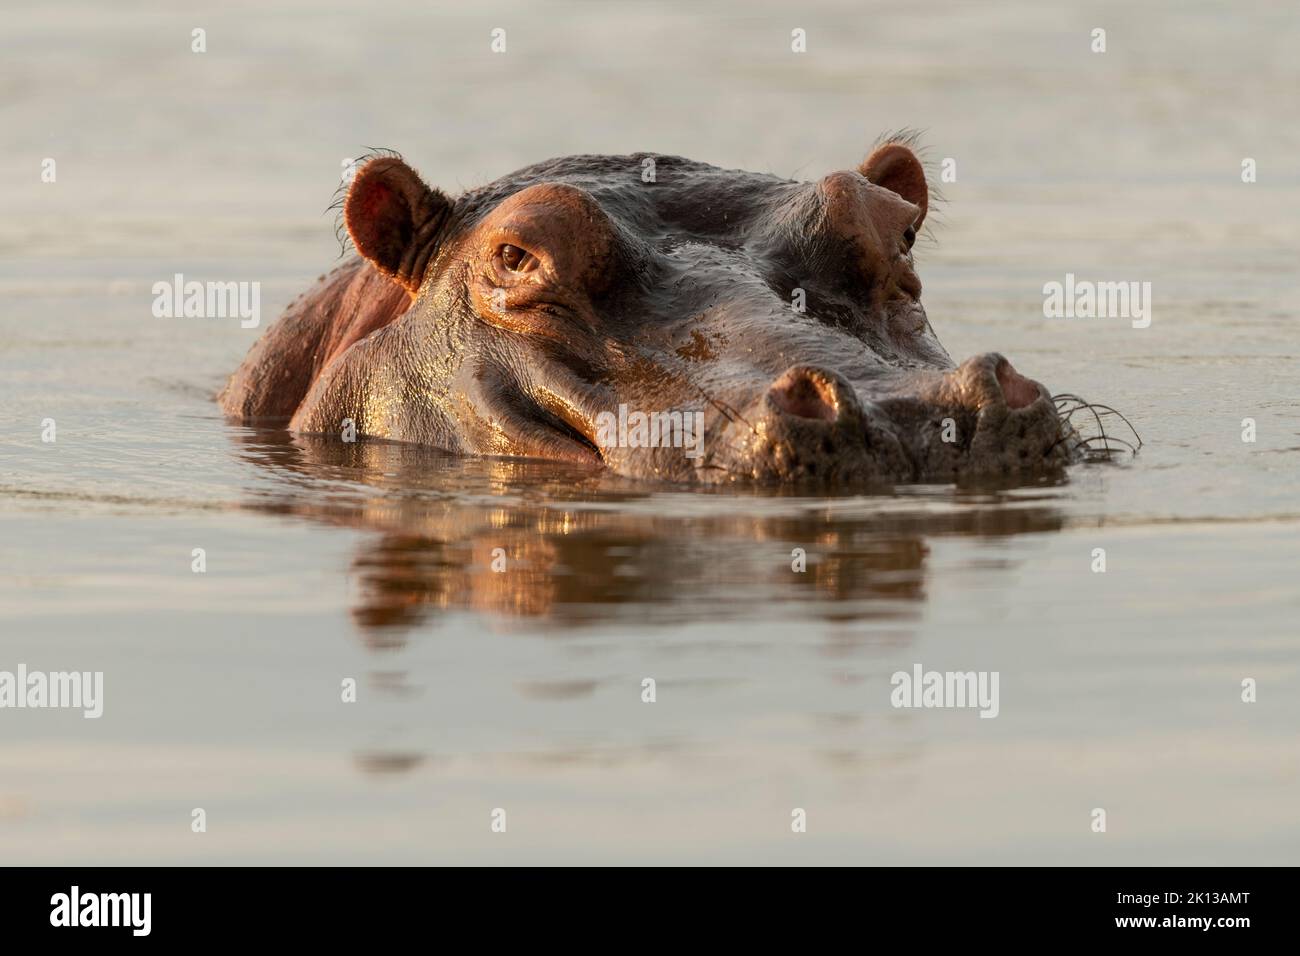 Hippo in Motlhabatsi River, Marataba, Marakele National Park, South Africa, Africa Stock Photo